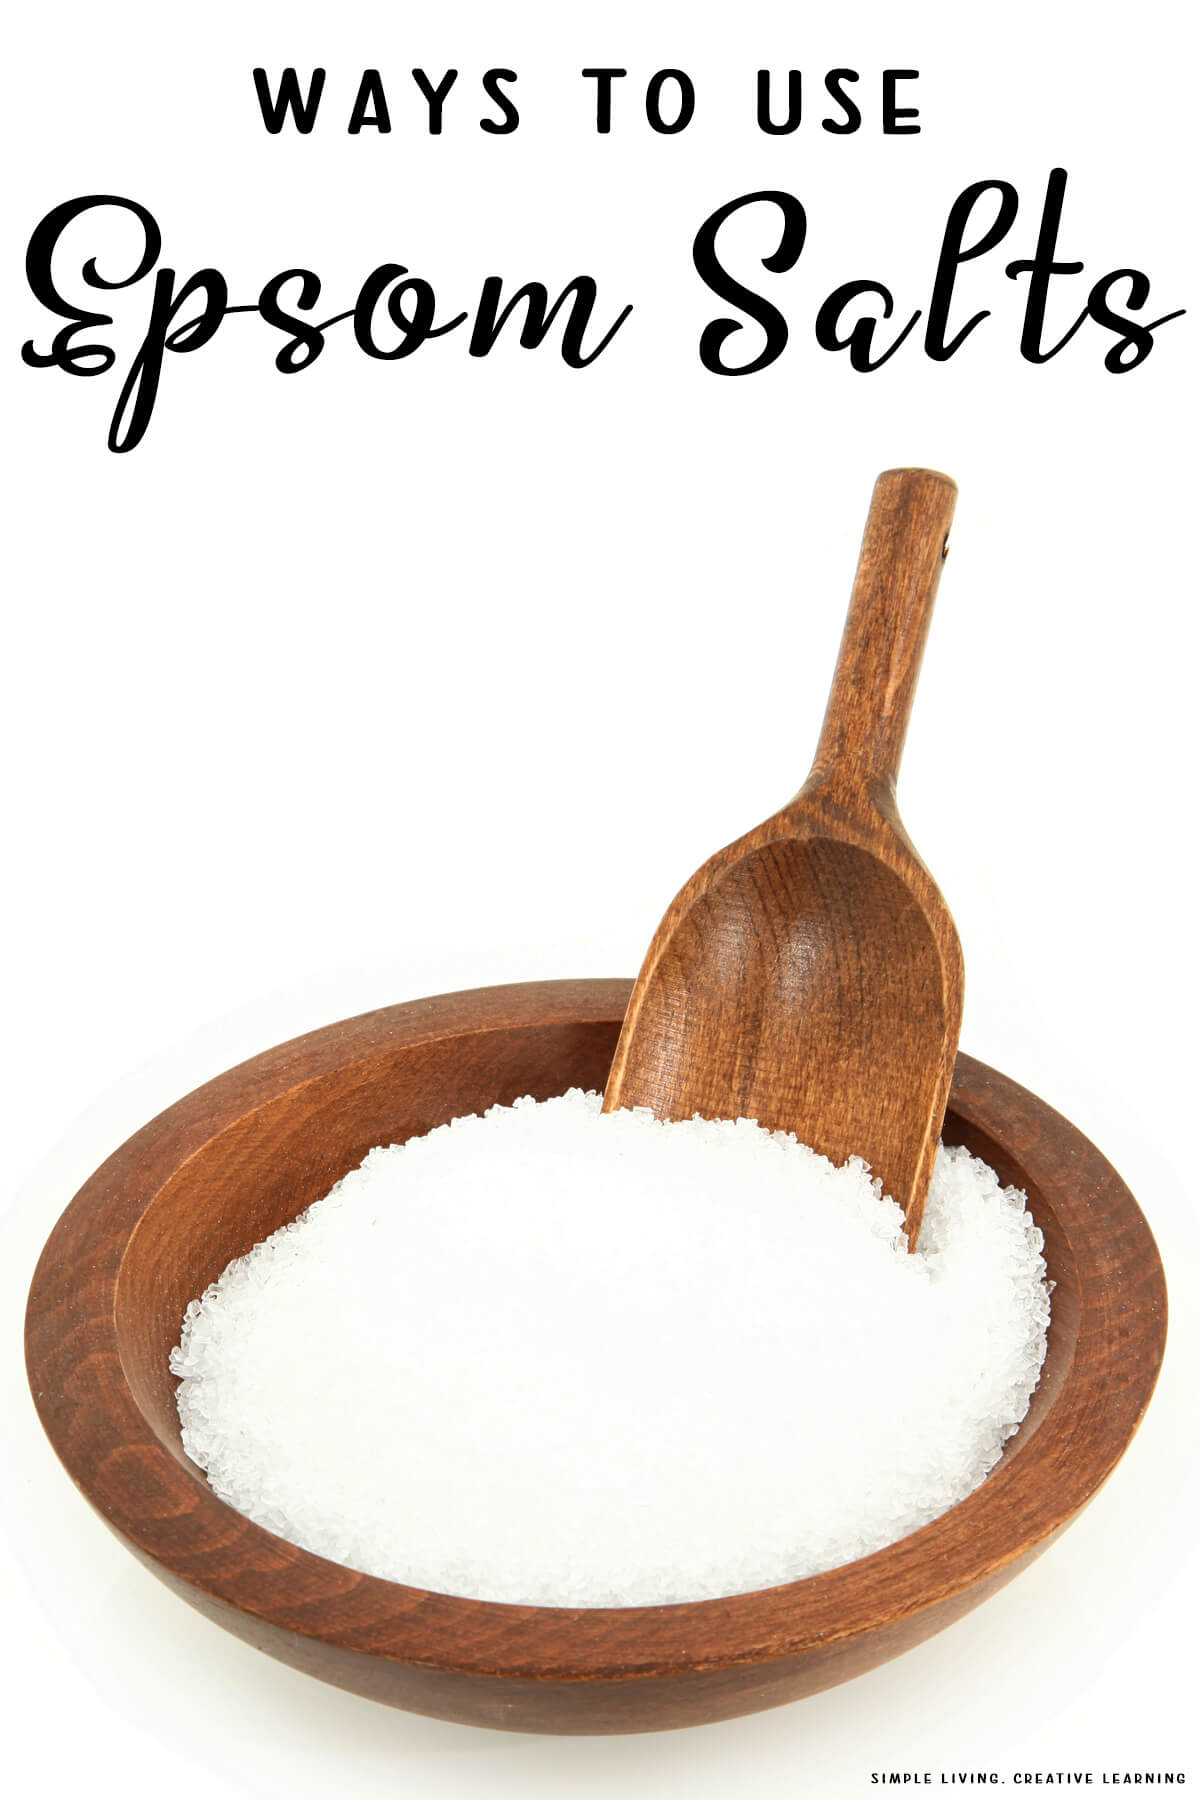 Ways to Use Epsom Salts